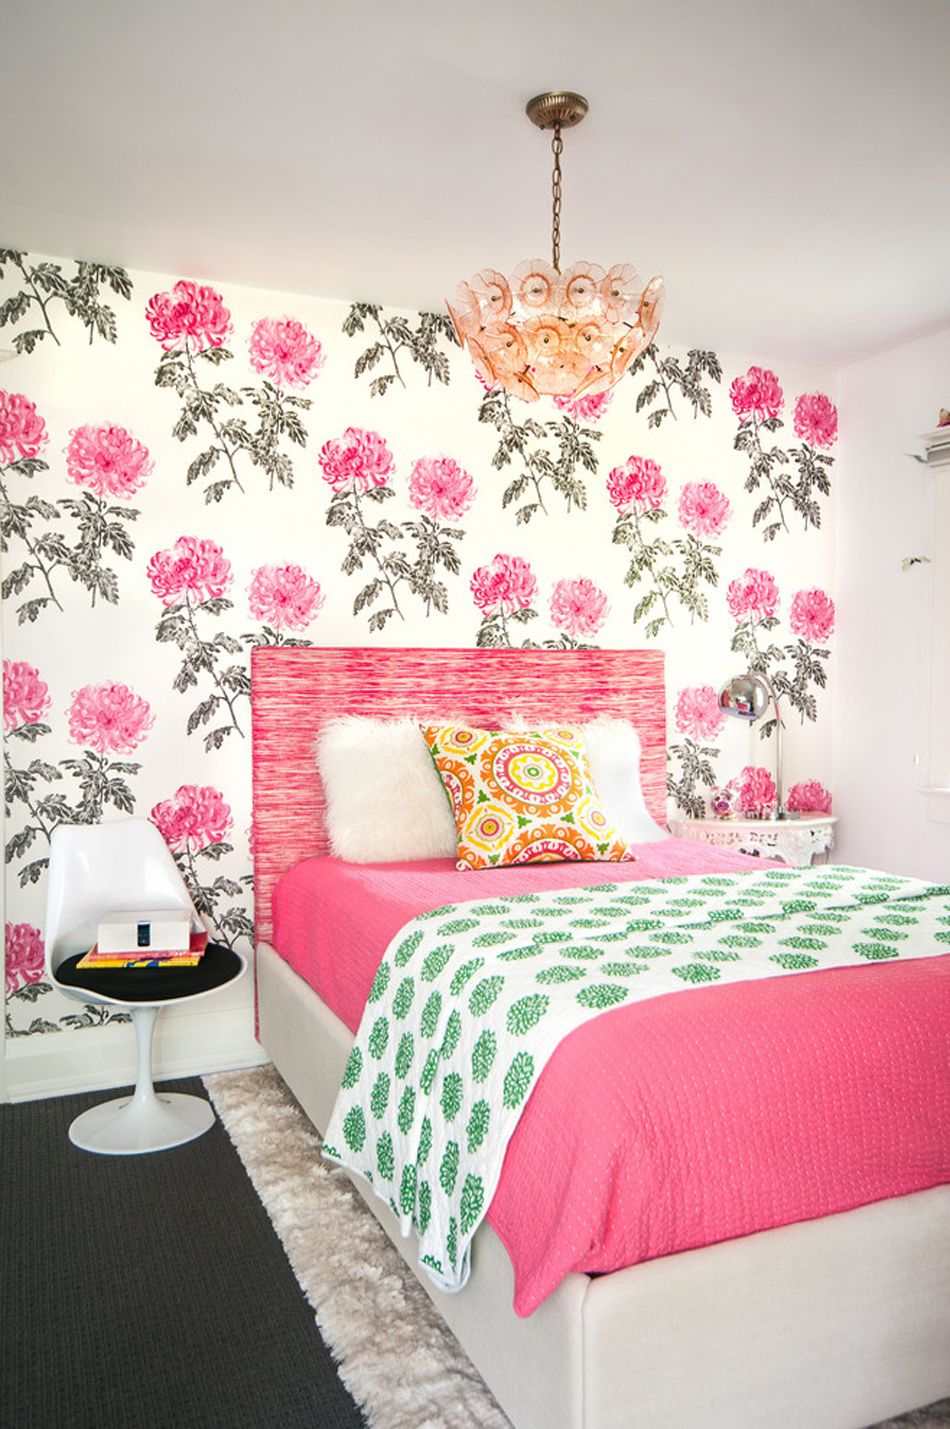 wallpaper dinding kamar tidur romantis,bedroom,bed,room,furniture,pink